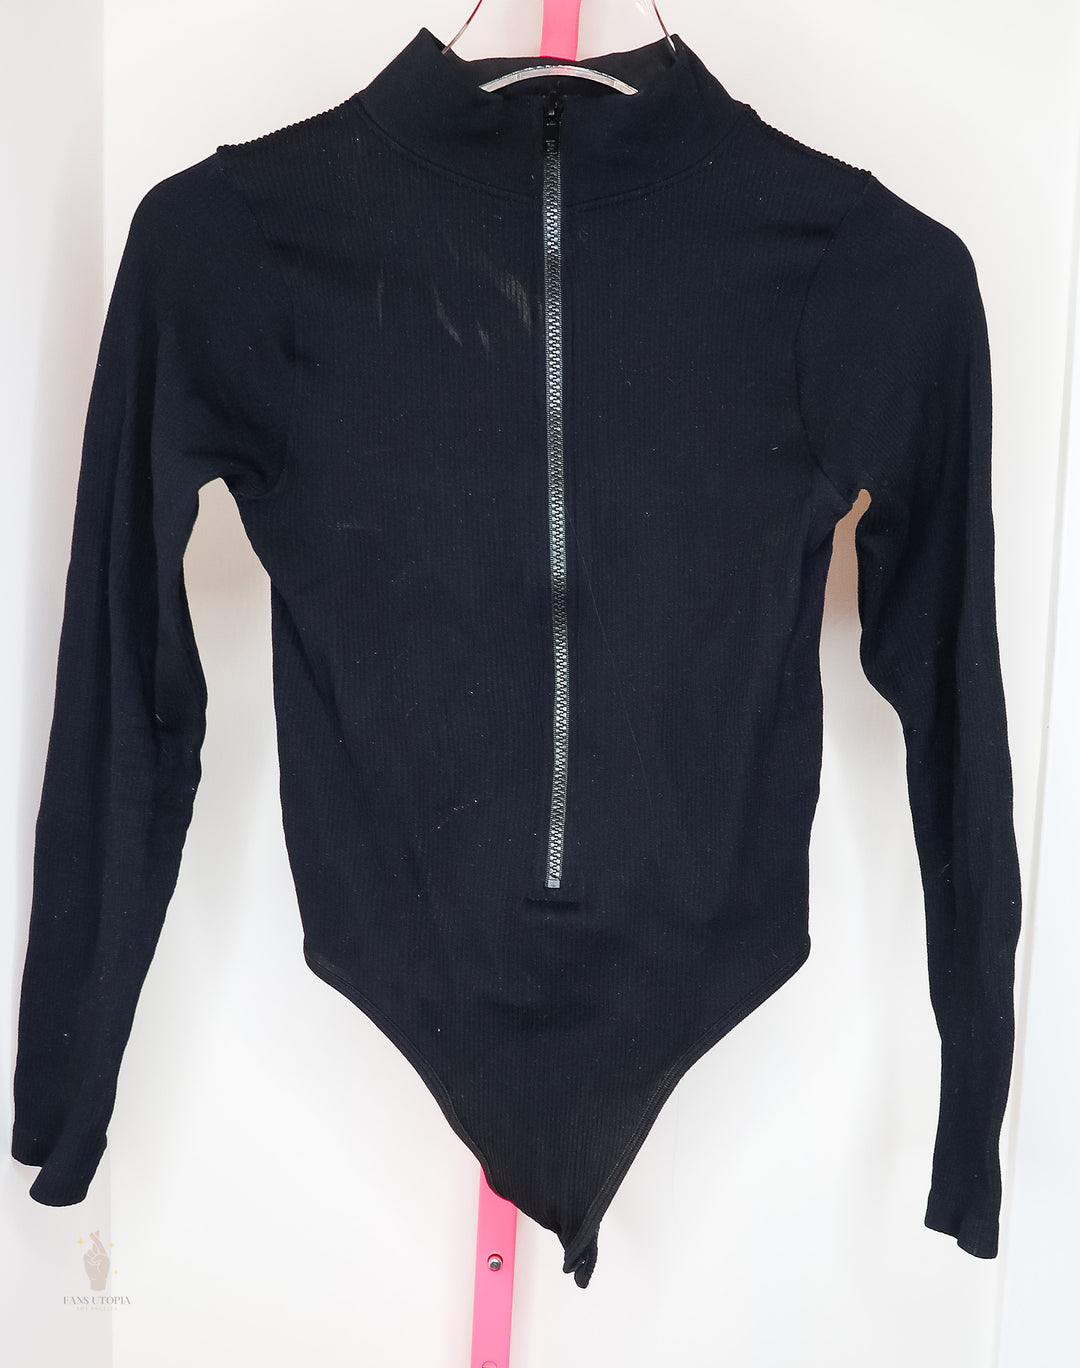 Kayley Gunner Black Ribbed Long Sleeve Zip Bodysuit - FANS UTOPIA